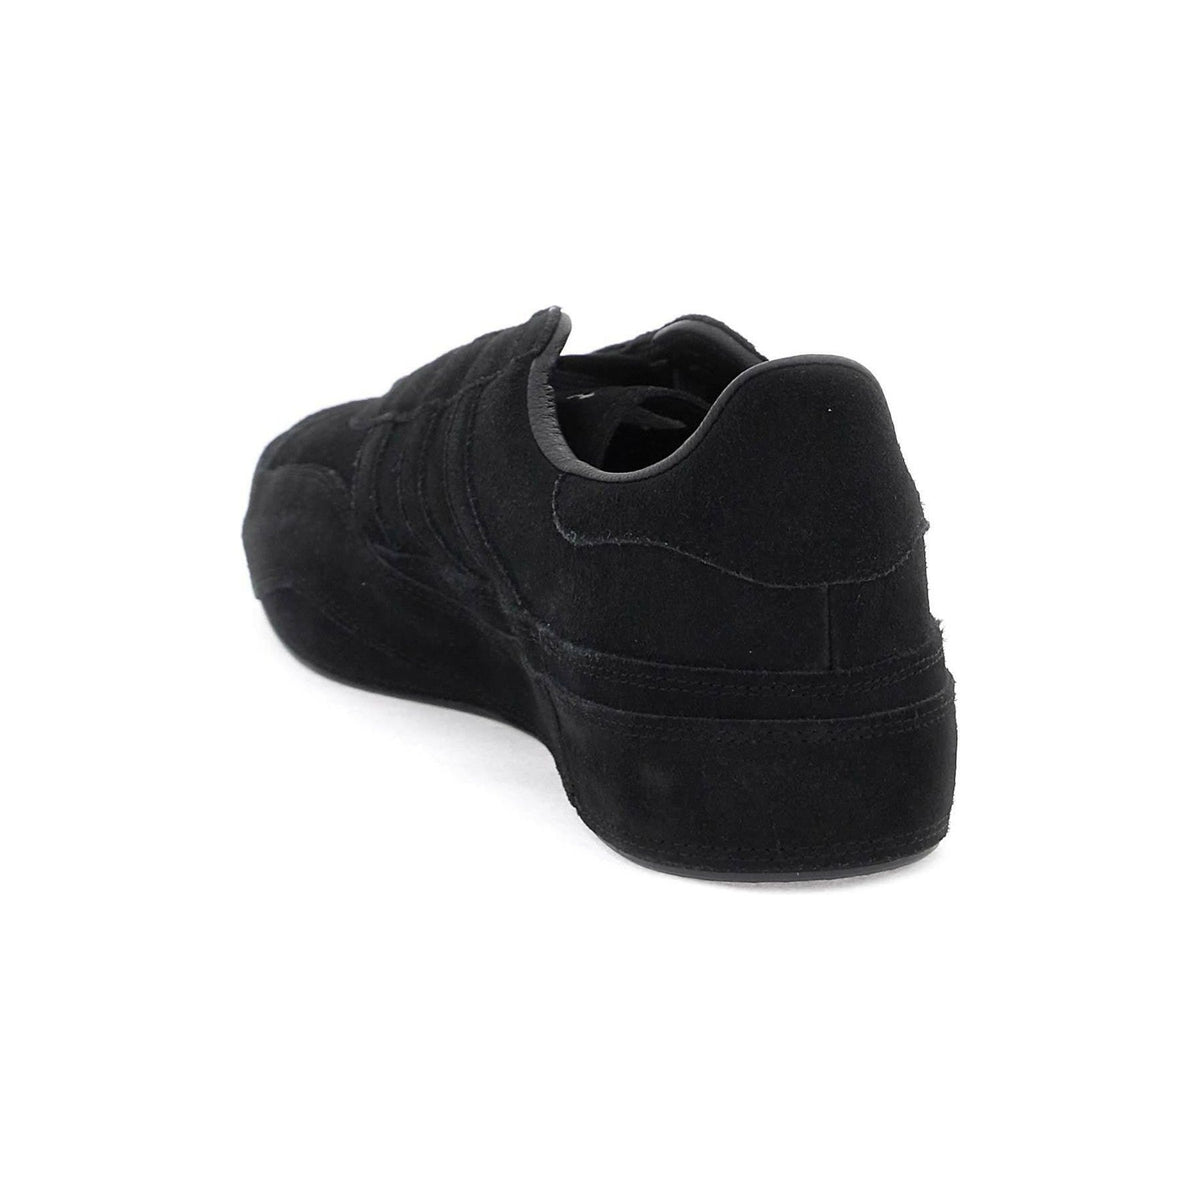 Y-3 - Black Gazzelle Suede Sneakers - JOHN JULIA